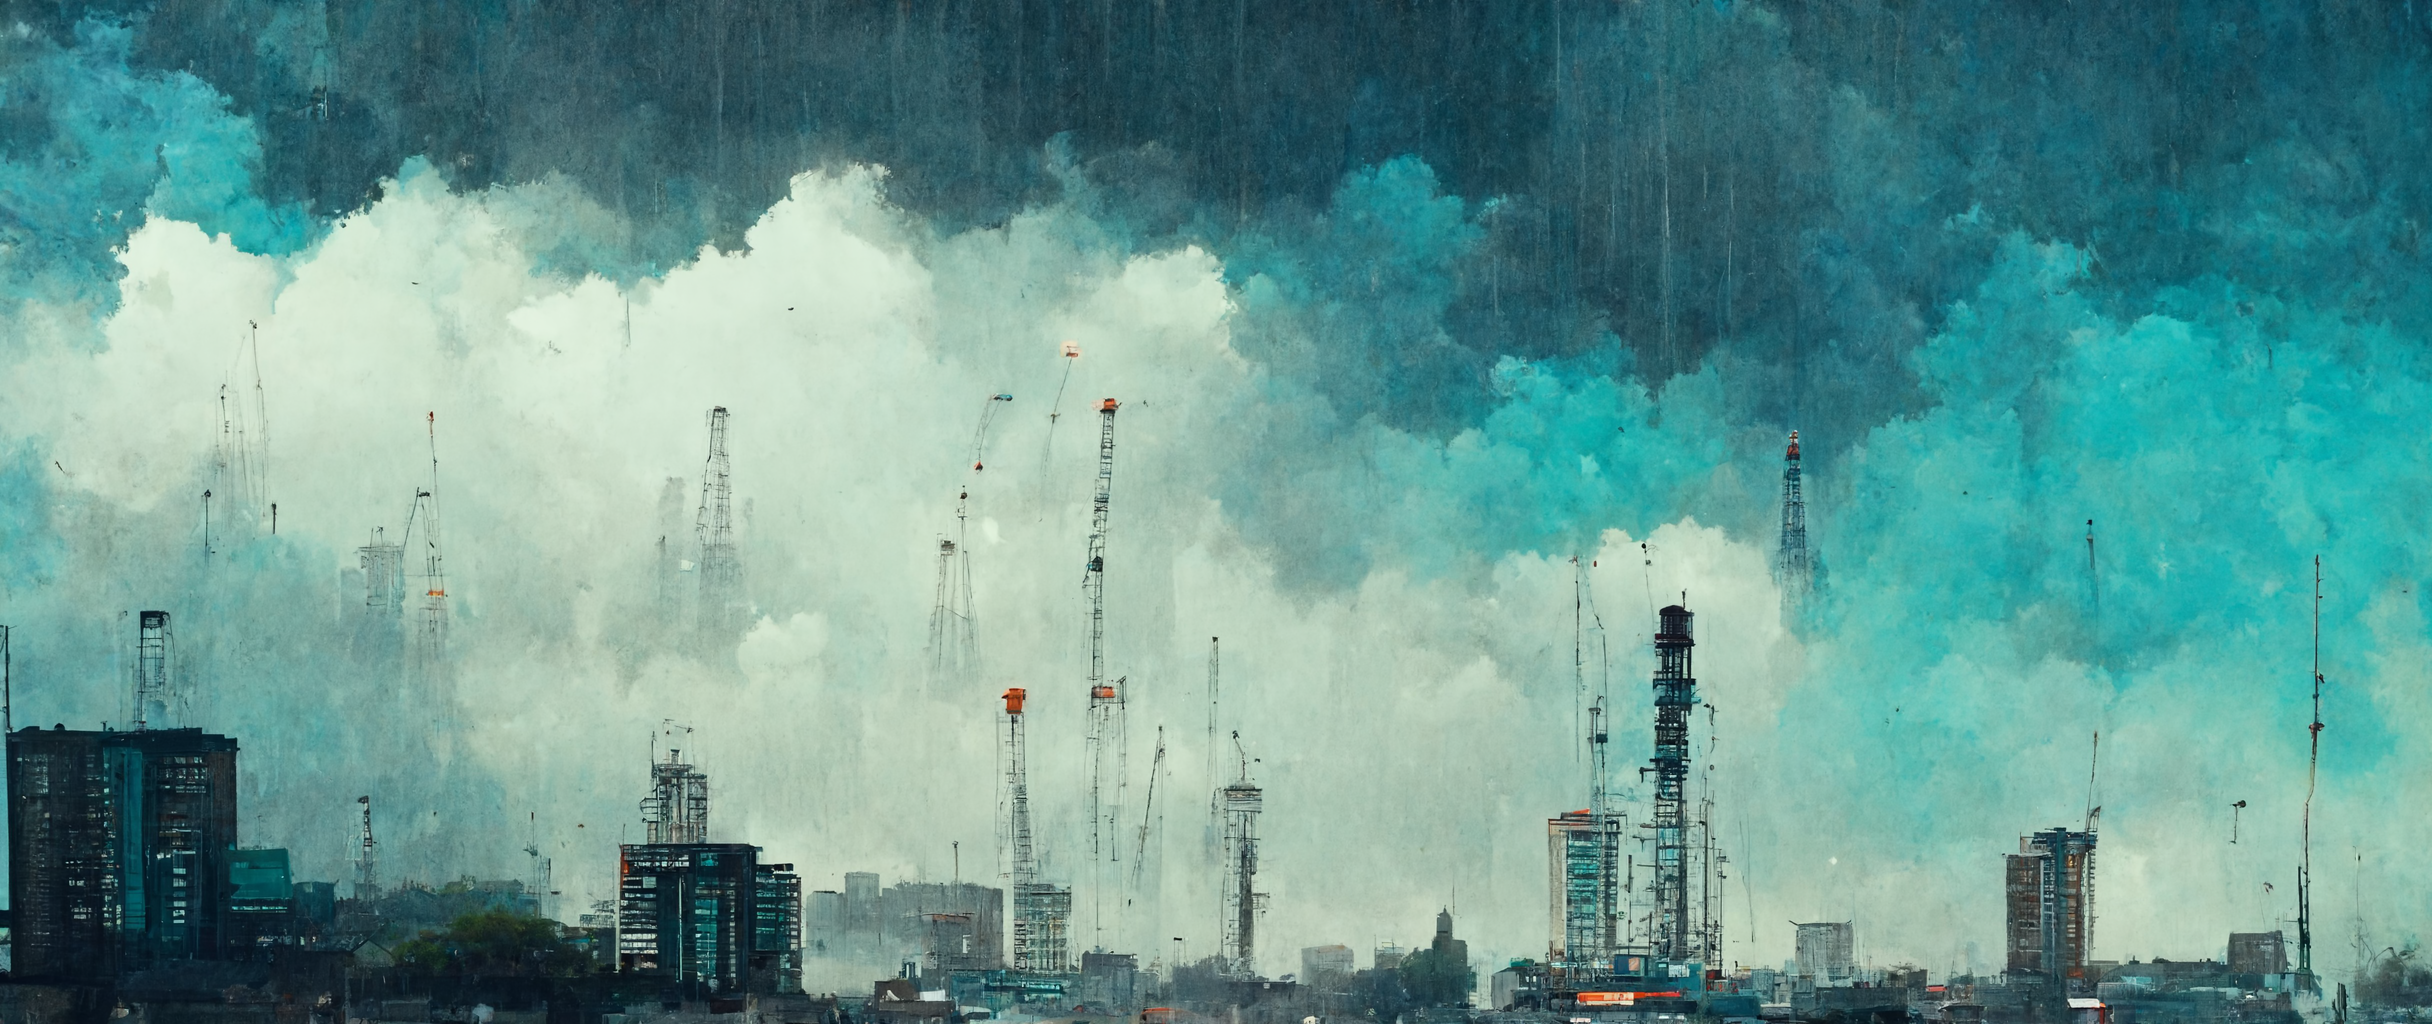 vibe_london_tower_blocks_cranes_evening_rain_grey_hyper_realist_0b7484bd-1445-4312-b8c9-e4ab6b6985e8